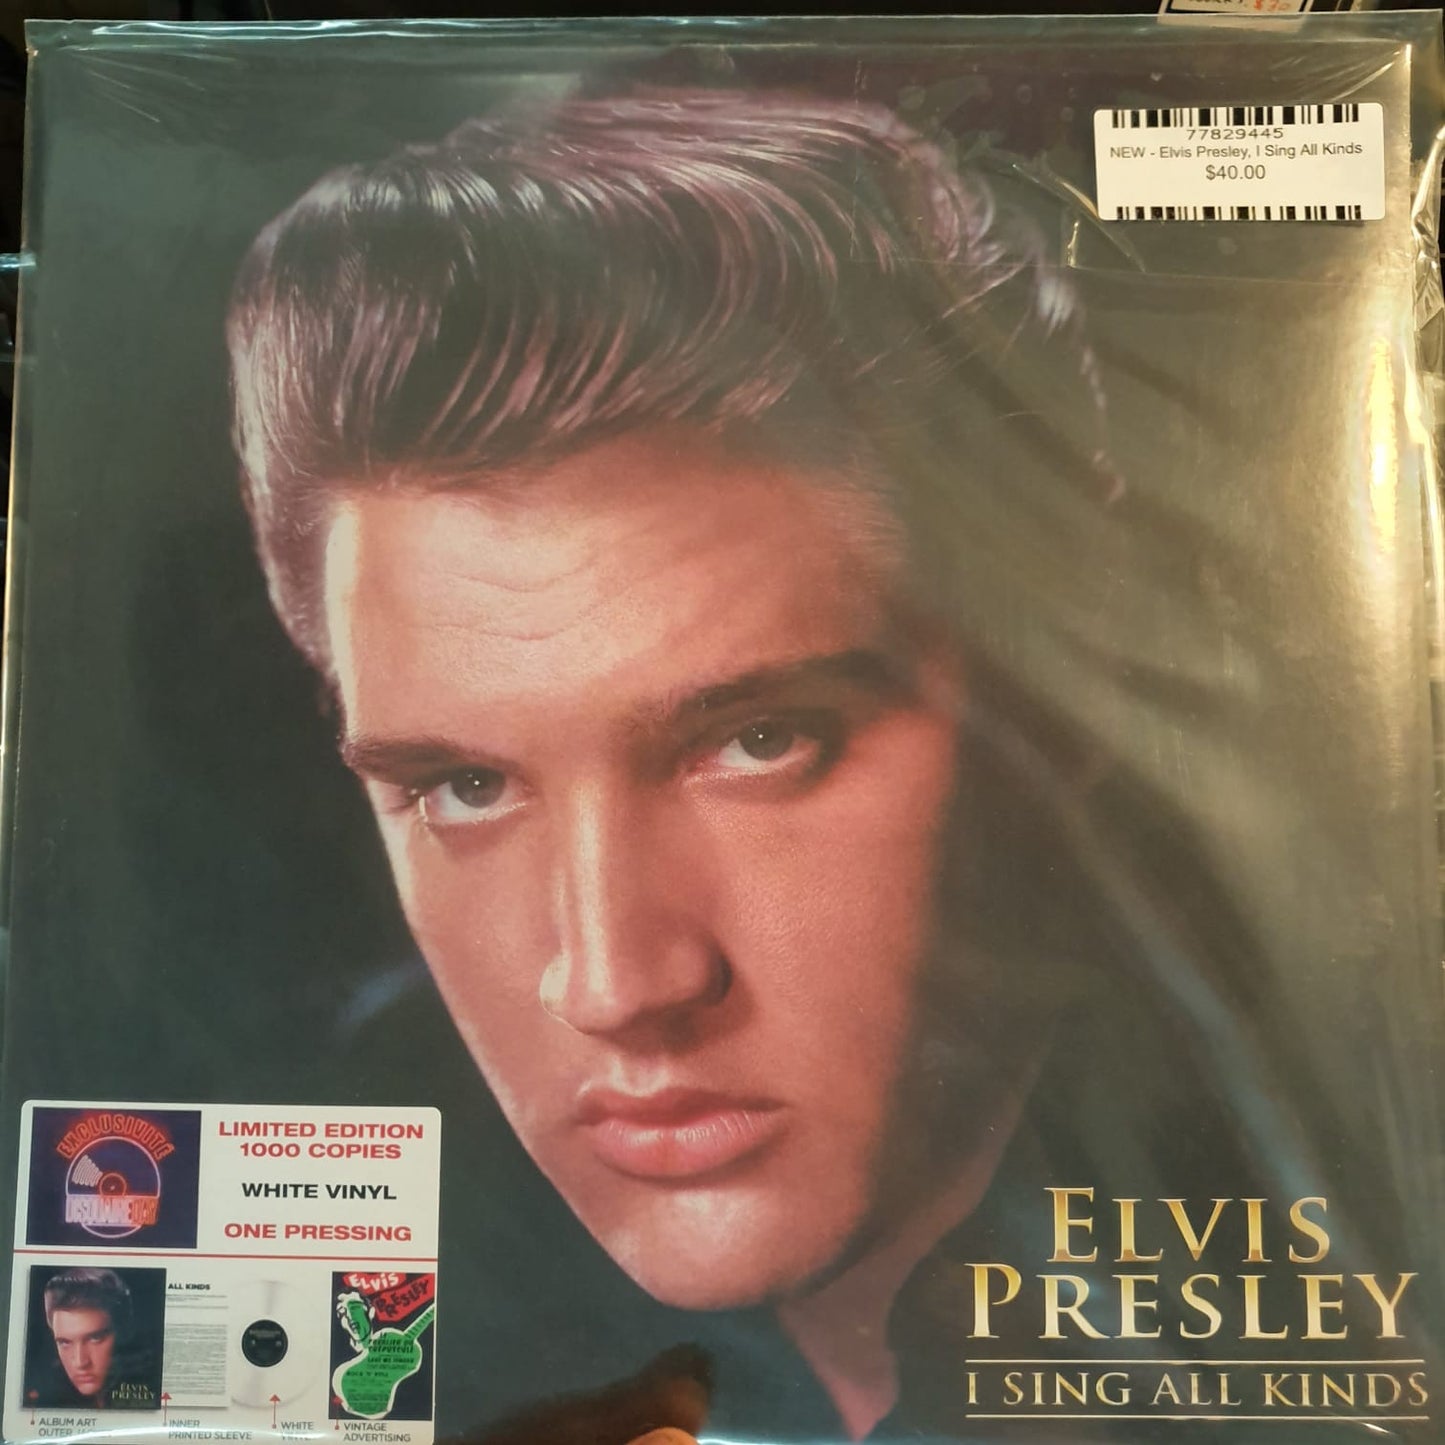 NEW - Elvis Presley, I Sing All Kinds White Vinyl